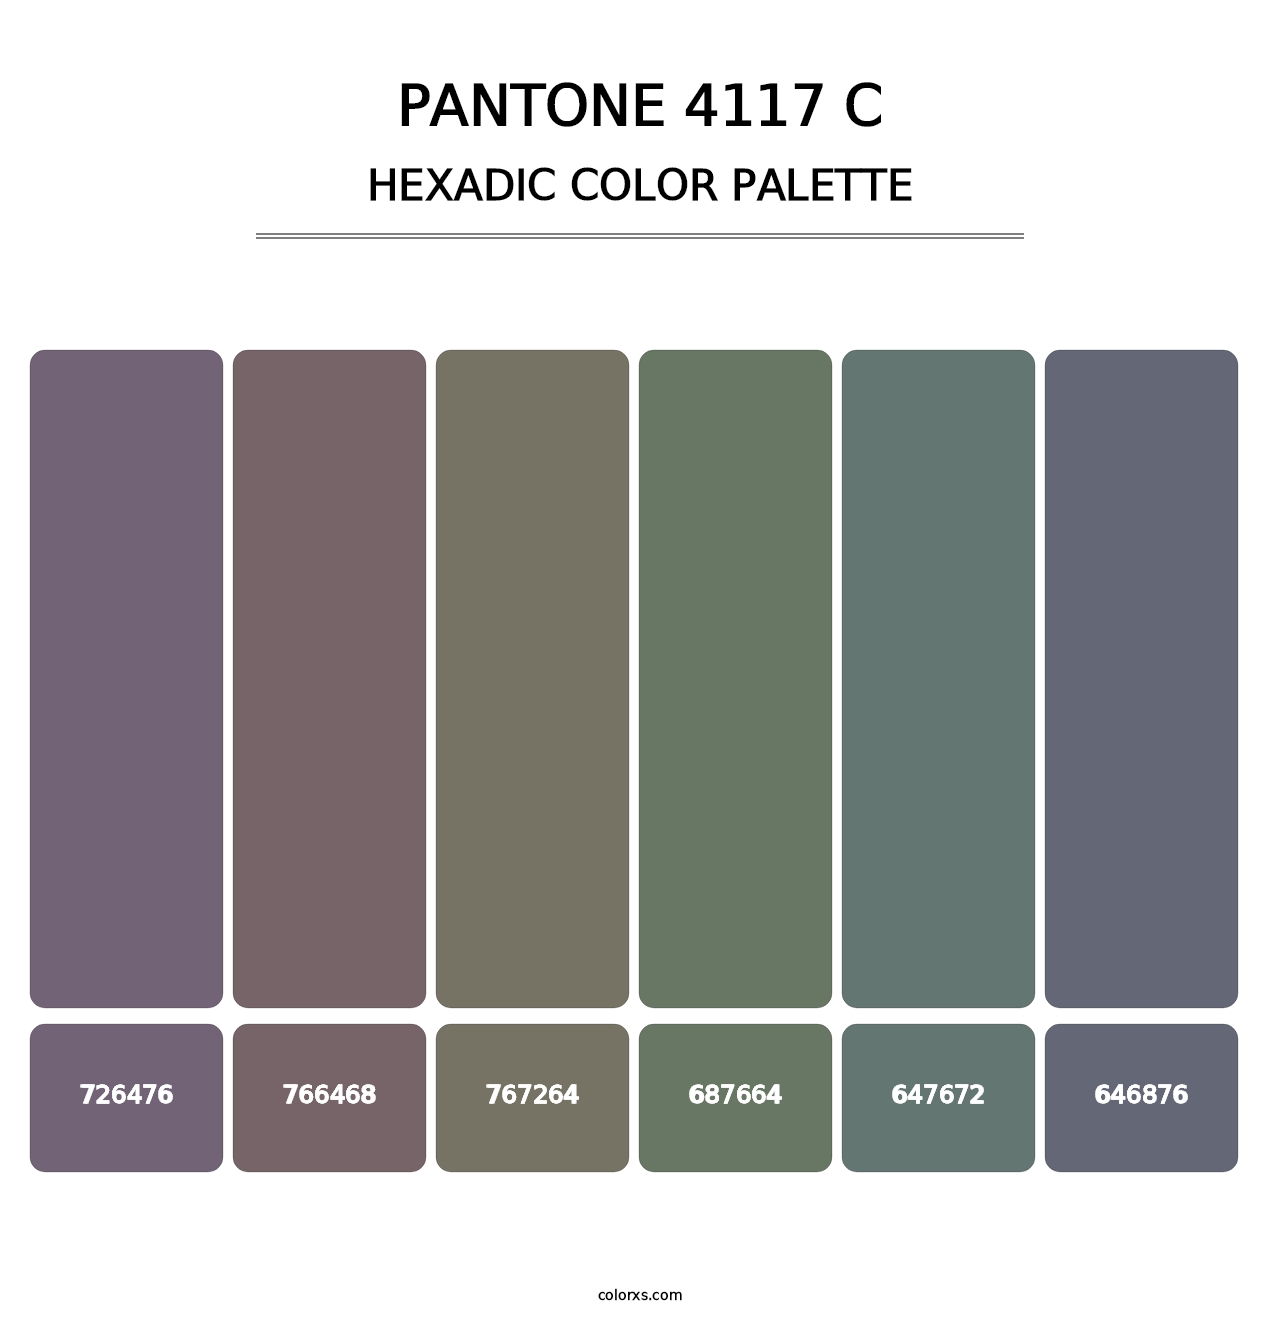 PANTONE 4117 C - Hexadic Color Palette